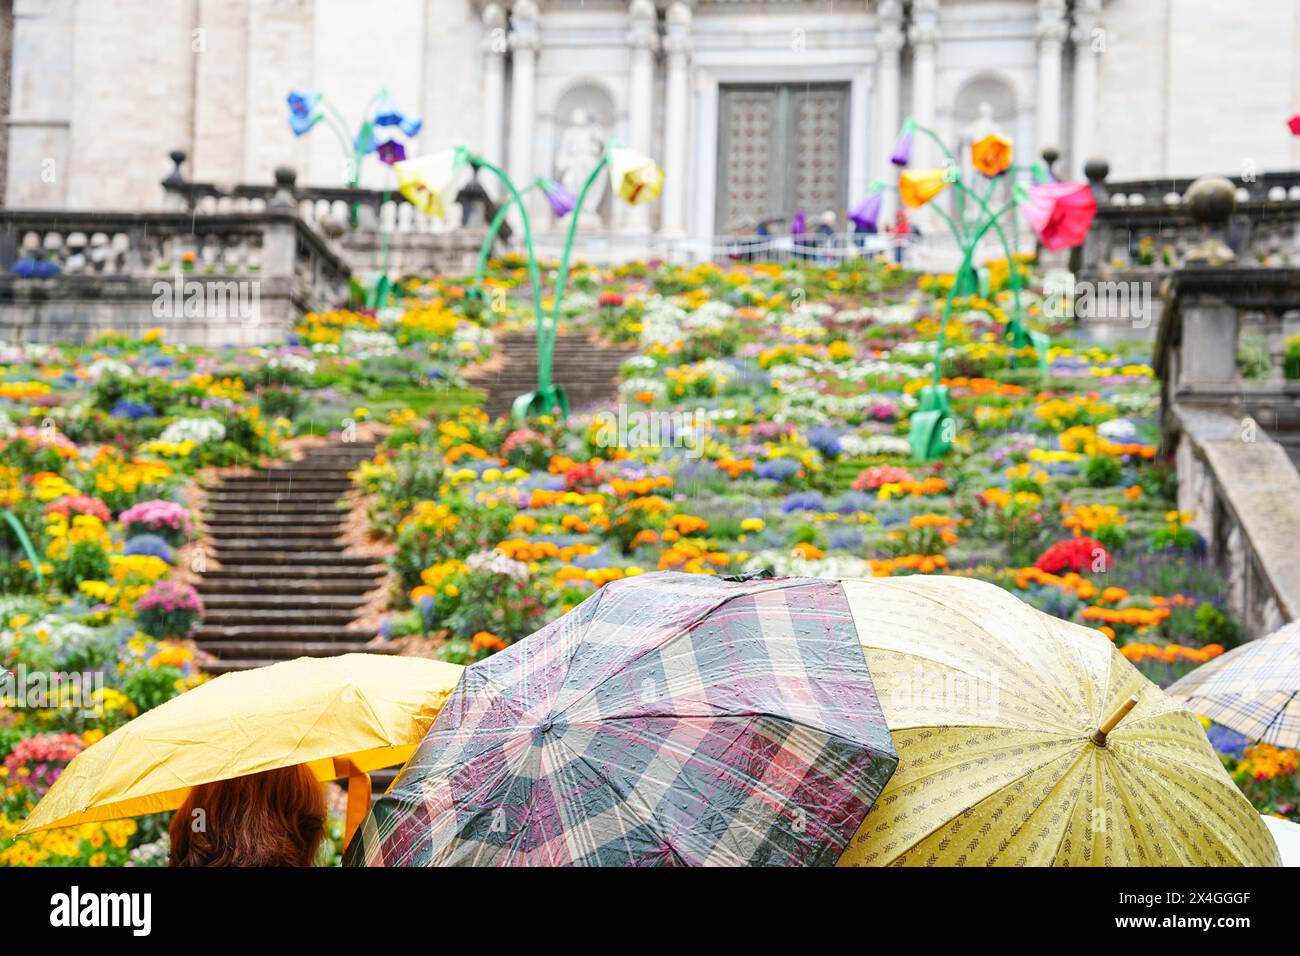 Spanish flower festival with rain and umbrellas. Temps de flors Stock Photo